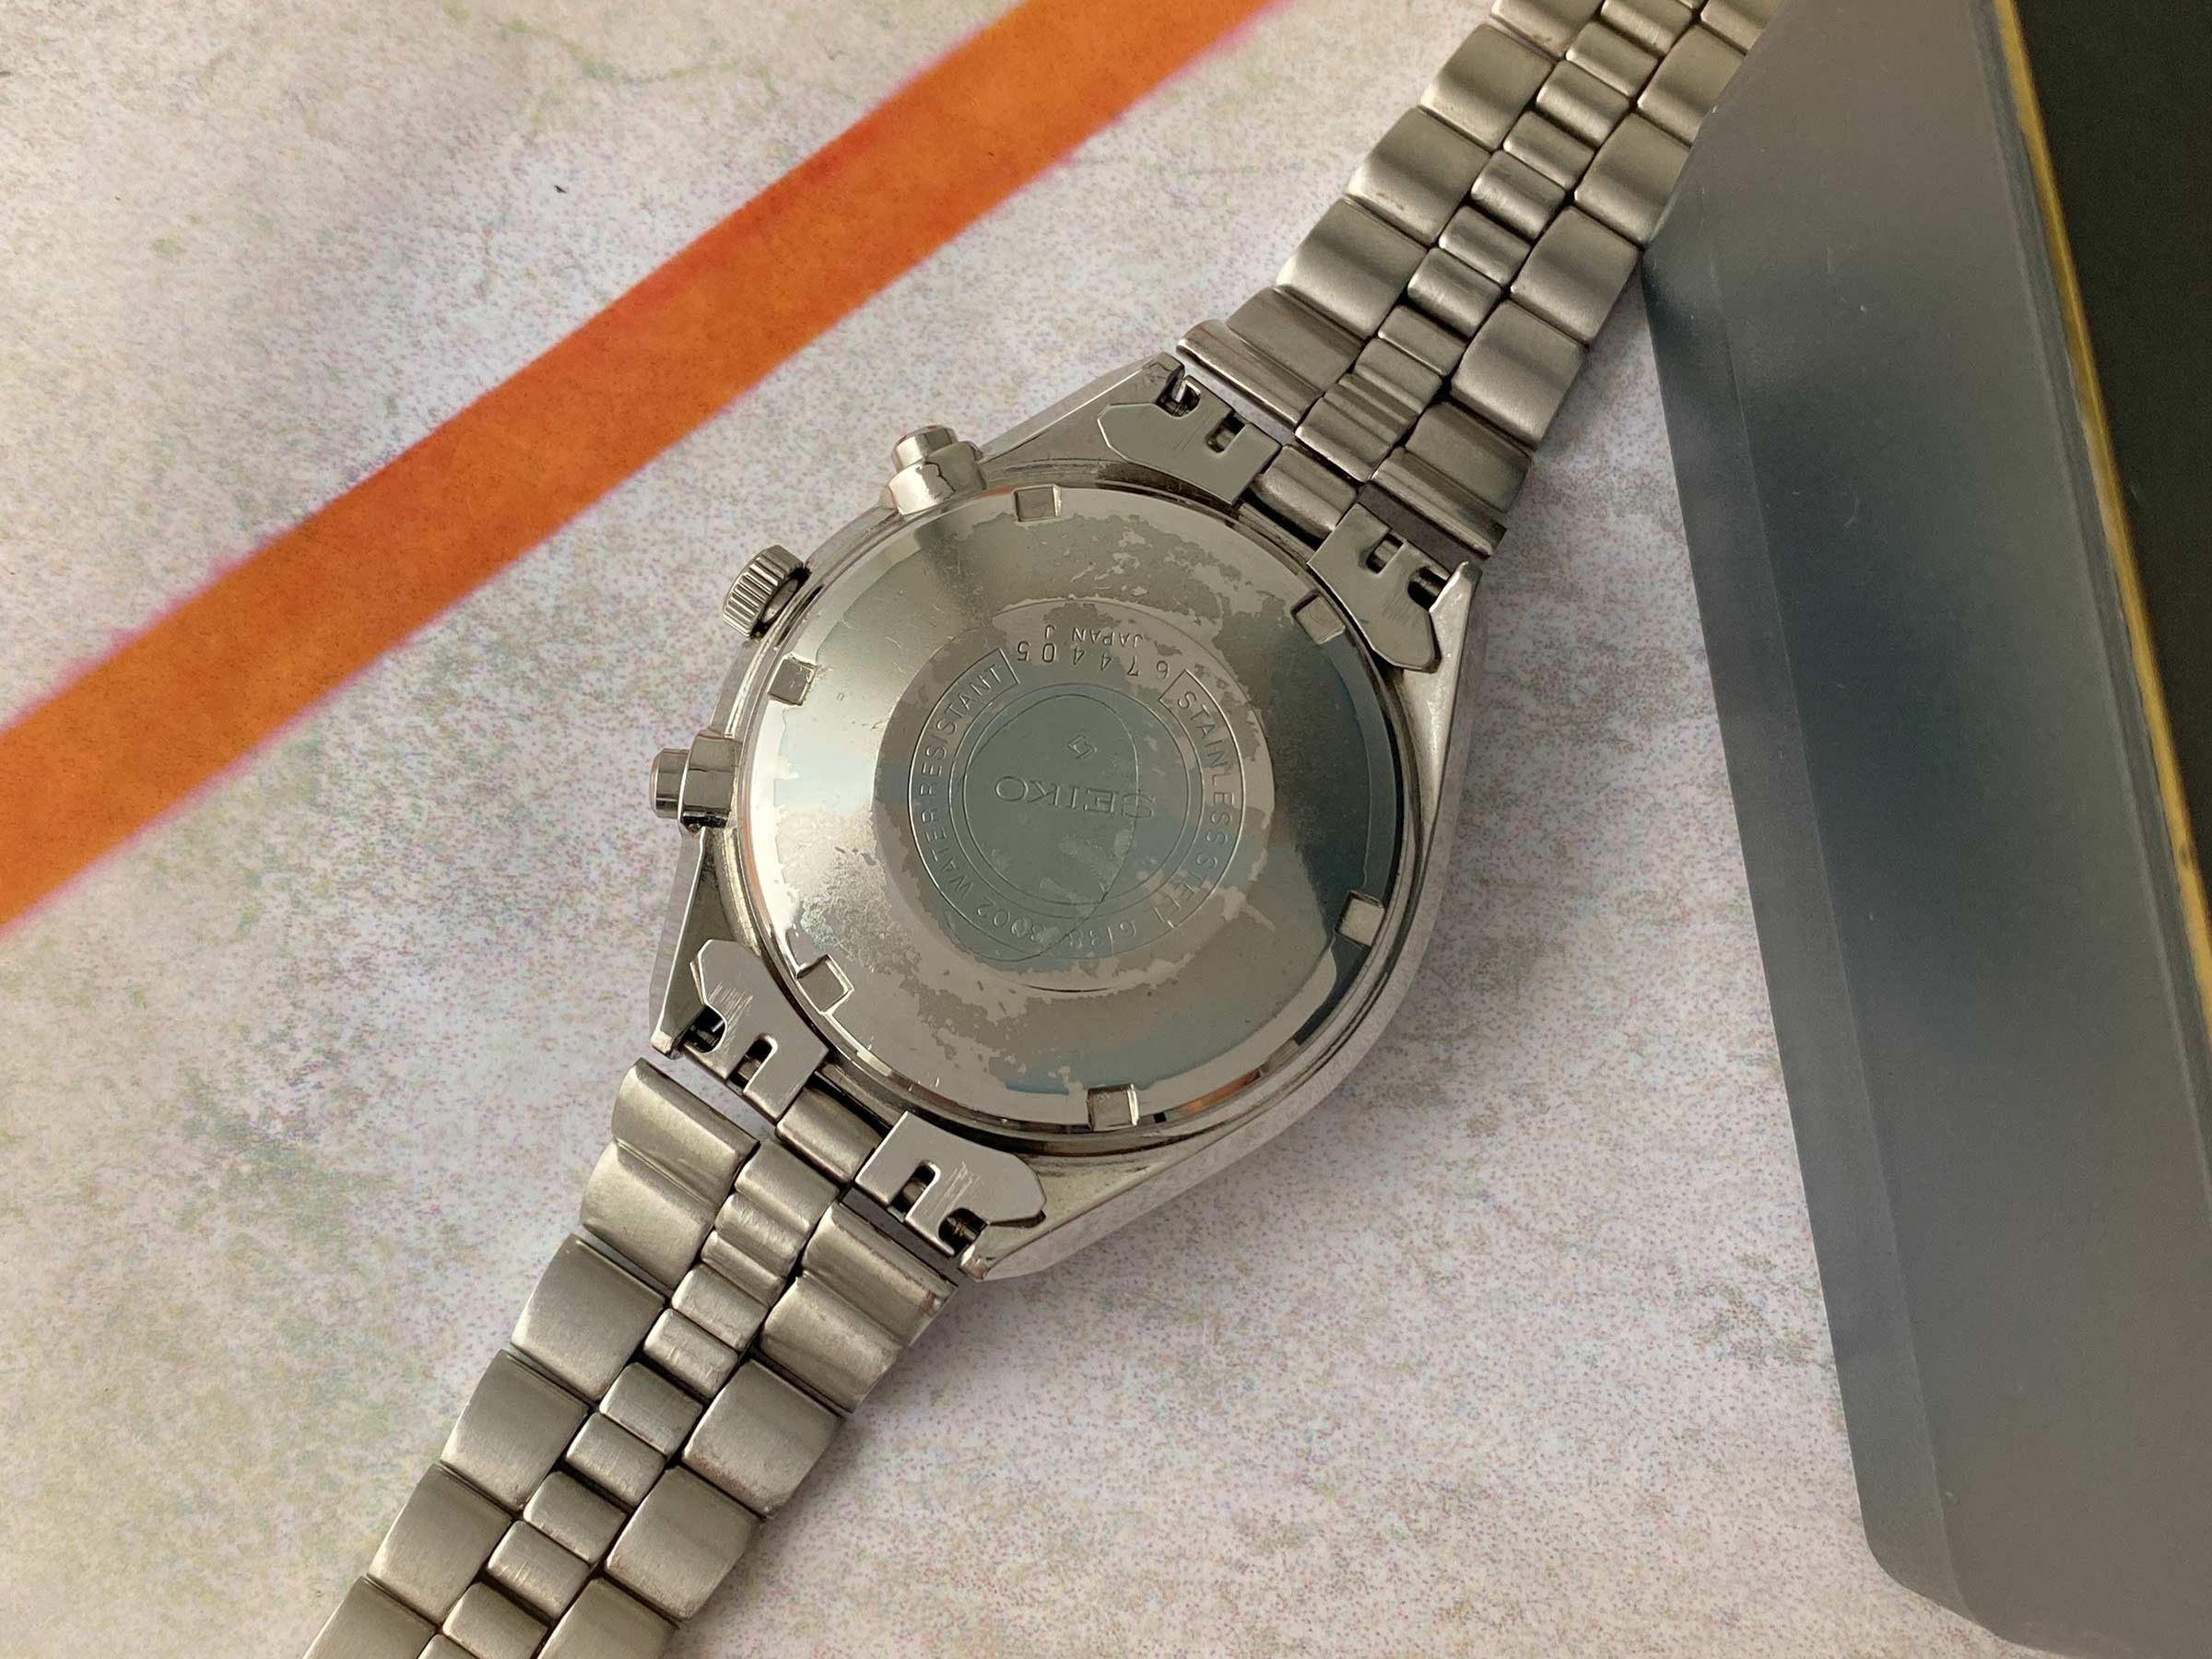 NOS SEIKO JUMBO Vintage automatic chronograph watch Ref. 6138-3002 Cal ...